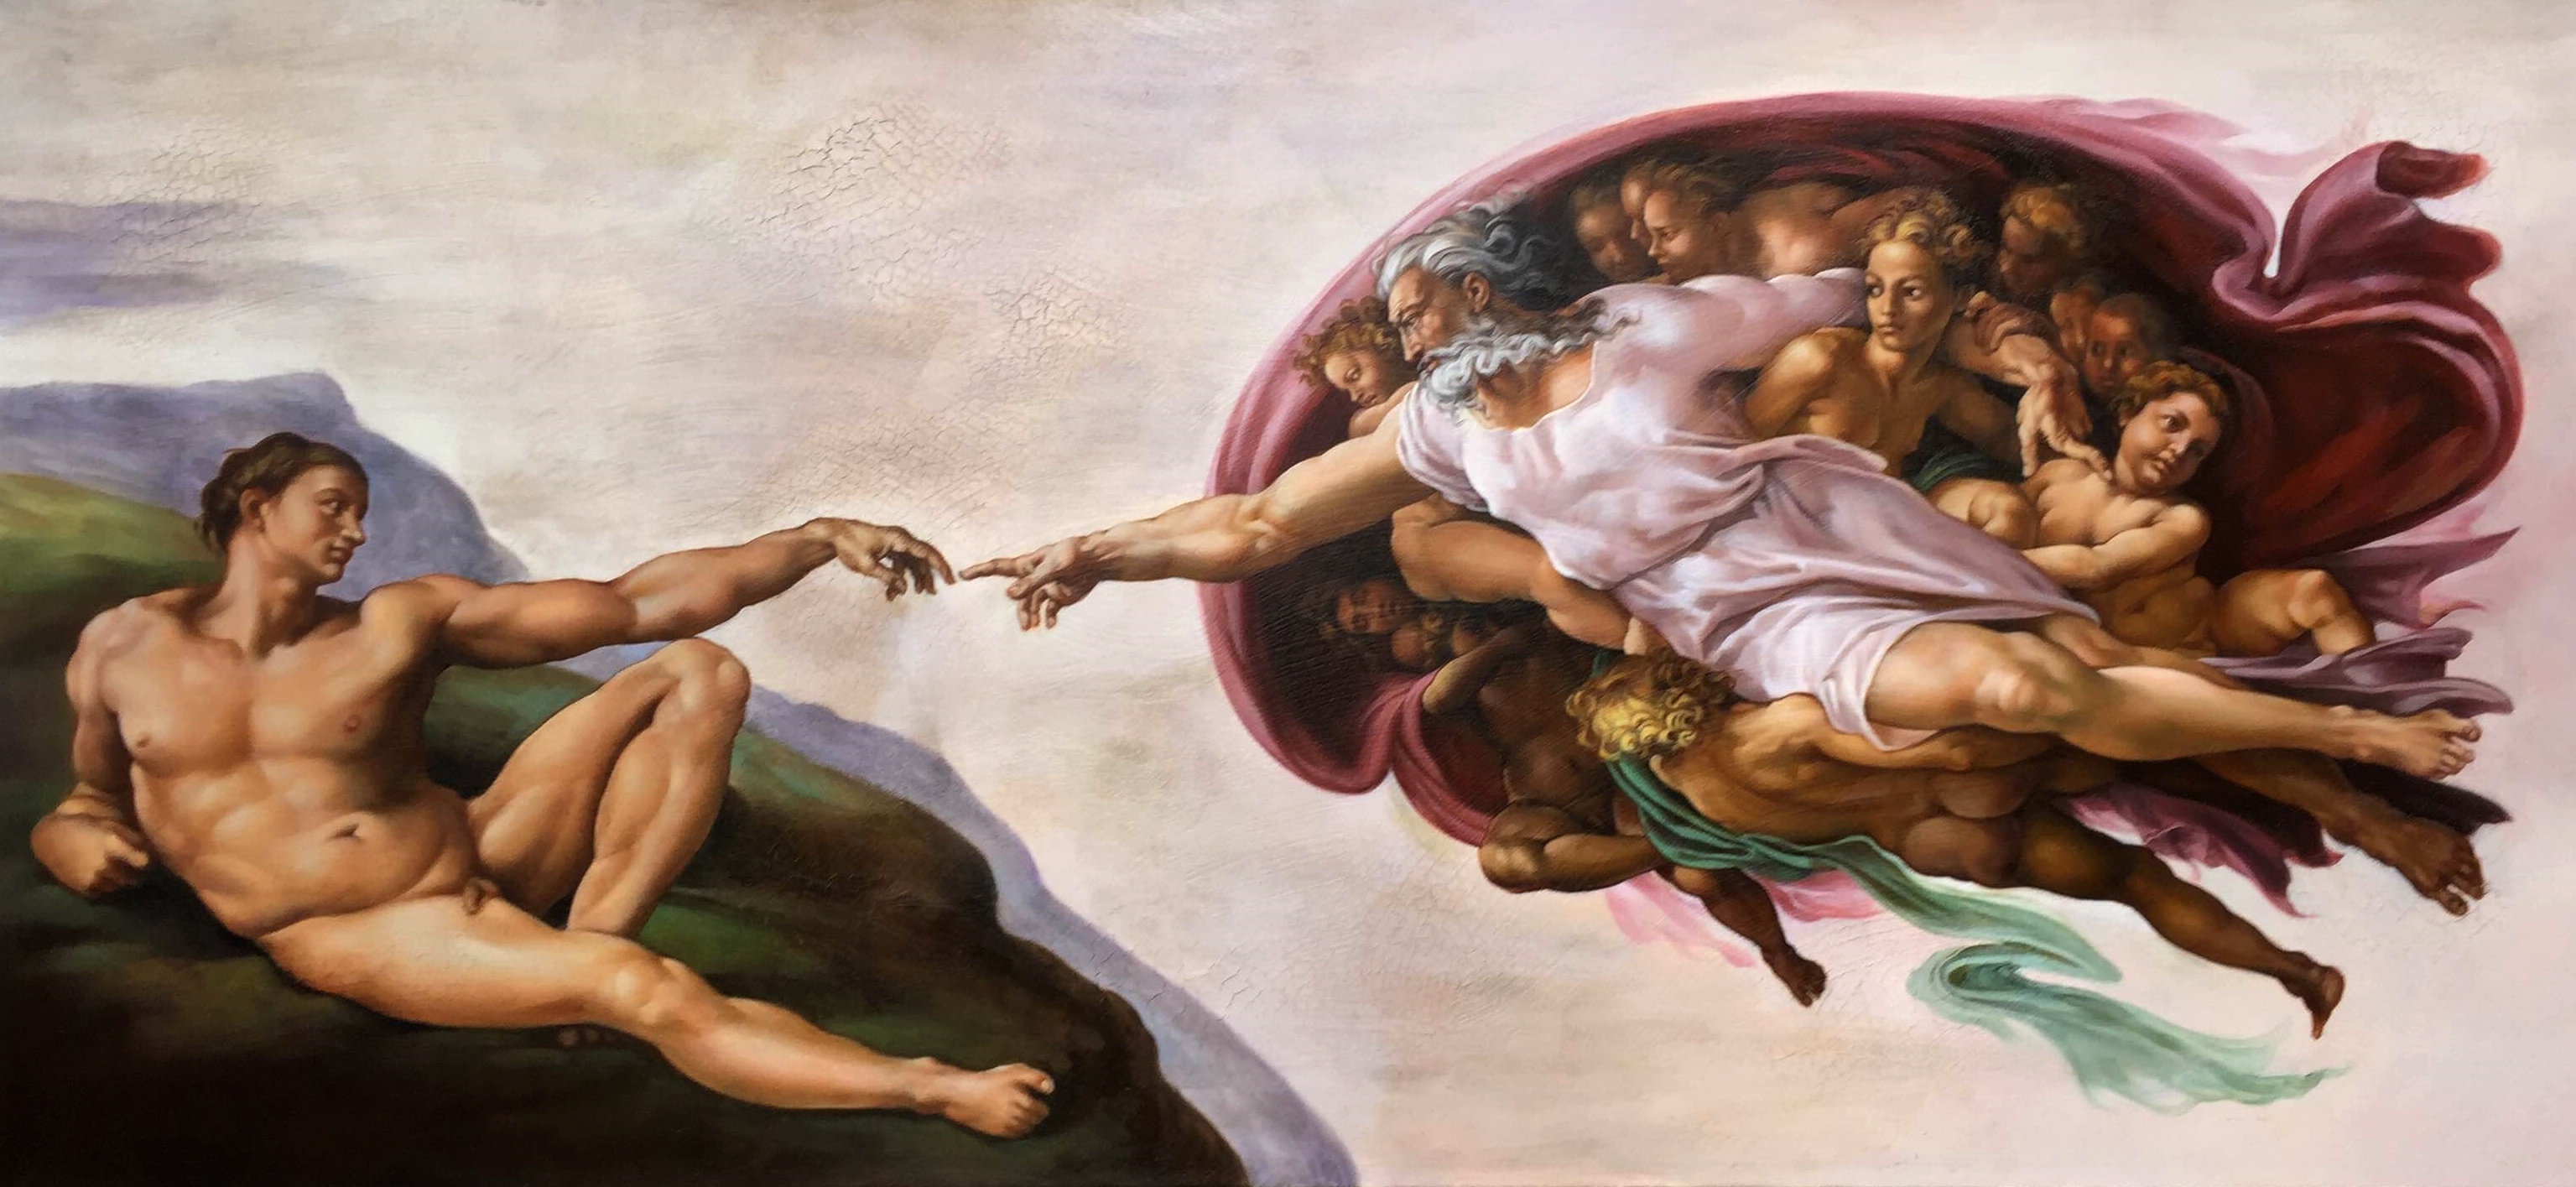 Что означает картина. Микеланджело Буонарроти Сотворение Адама. Микеланджело Буонарроти рождение Адама. "Сотворение Адама" Микеланджело, 1511. Микеланджело Буонарроти картины Сотворение Адама.